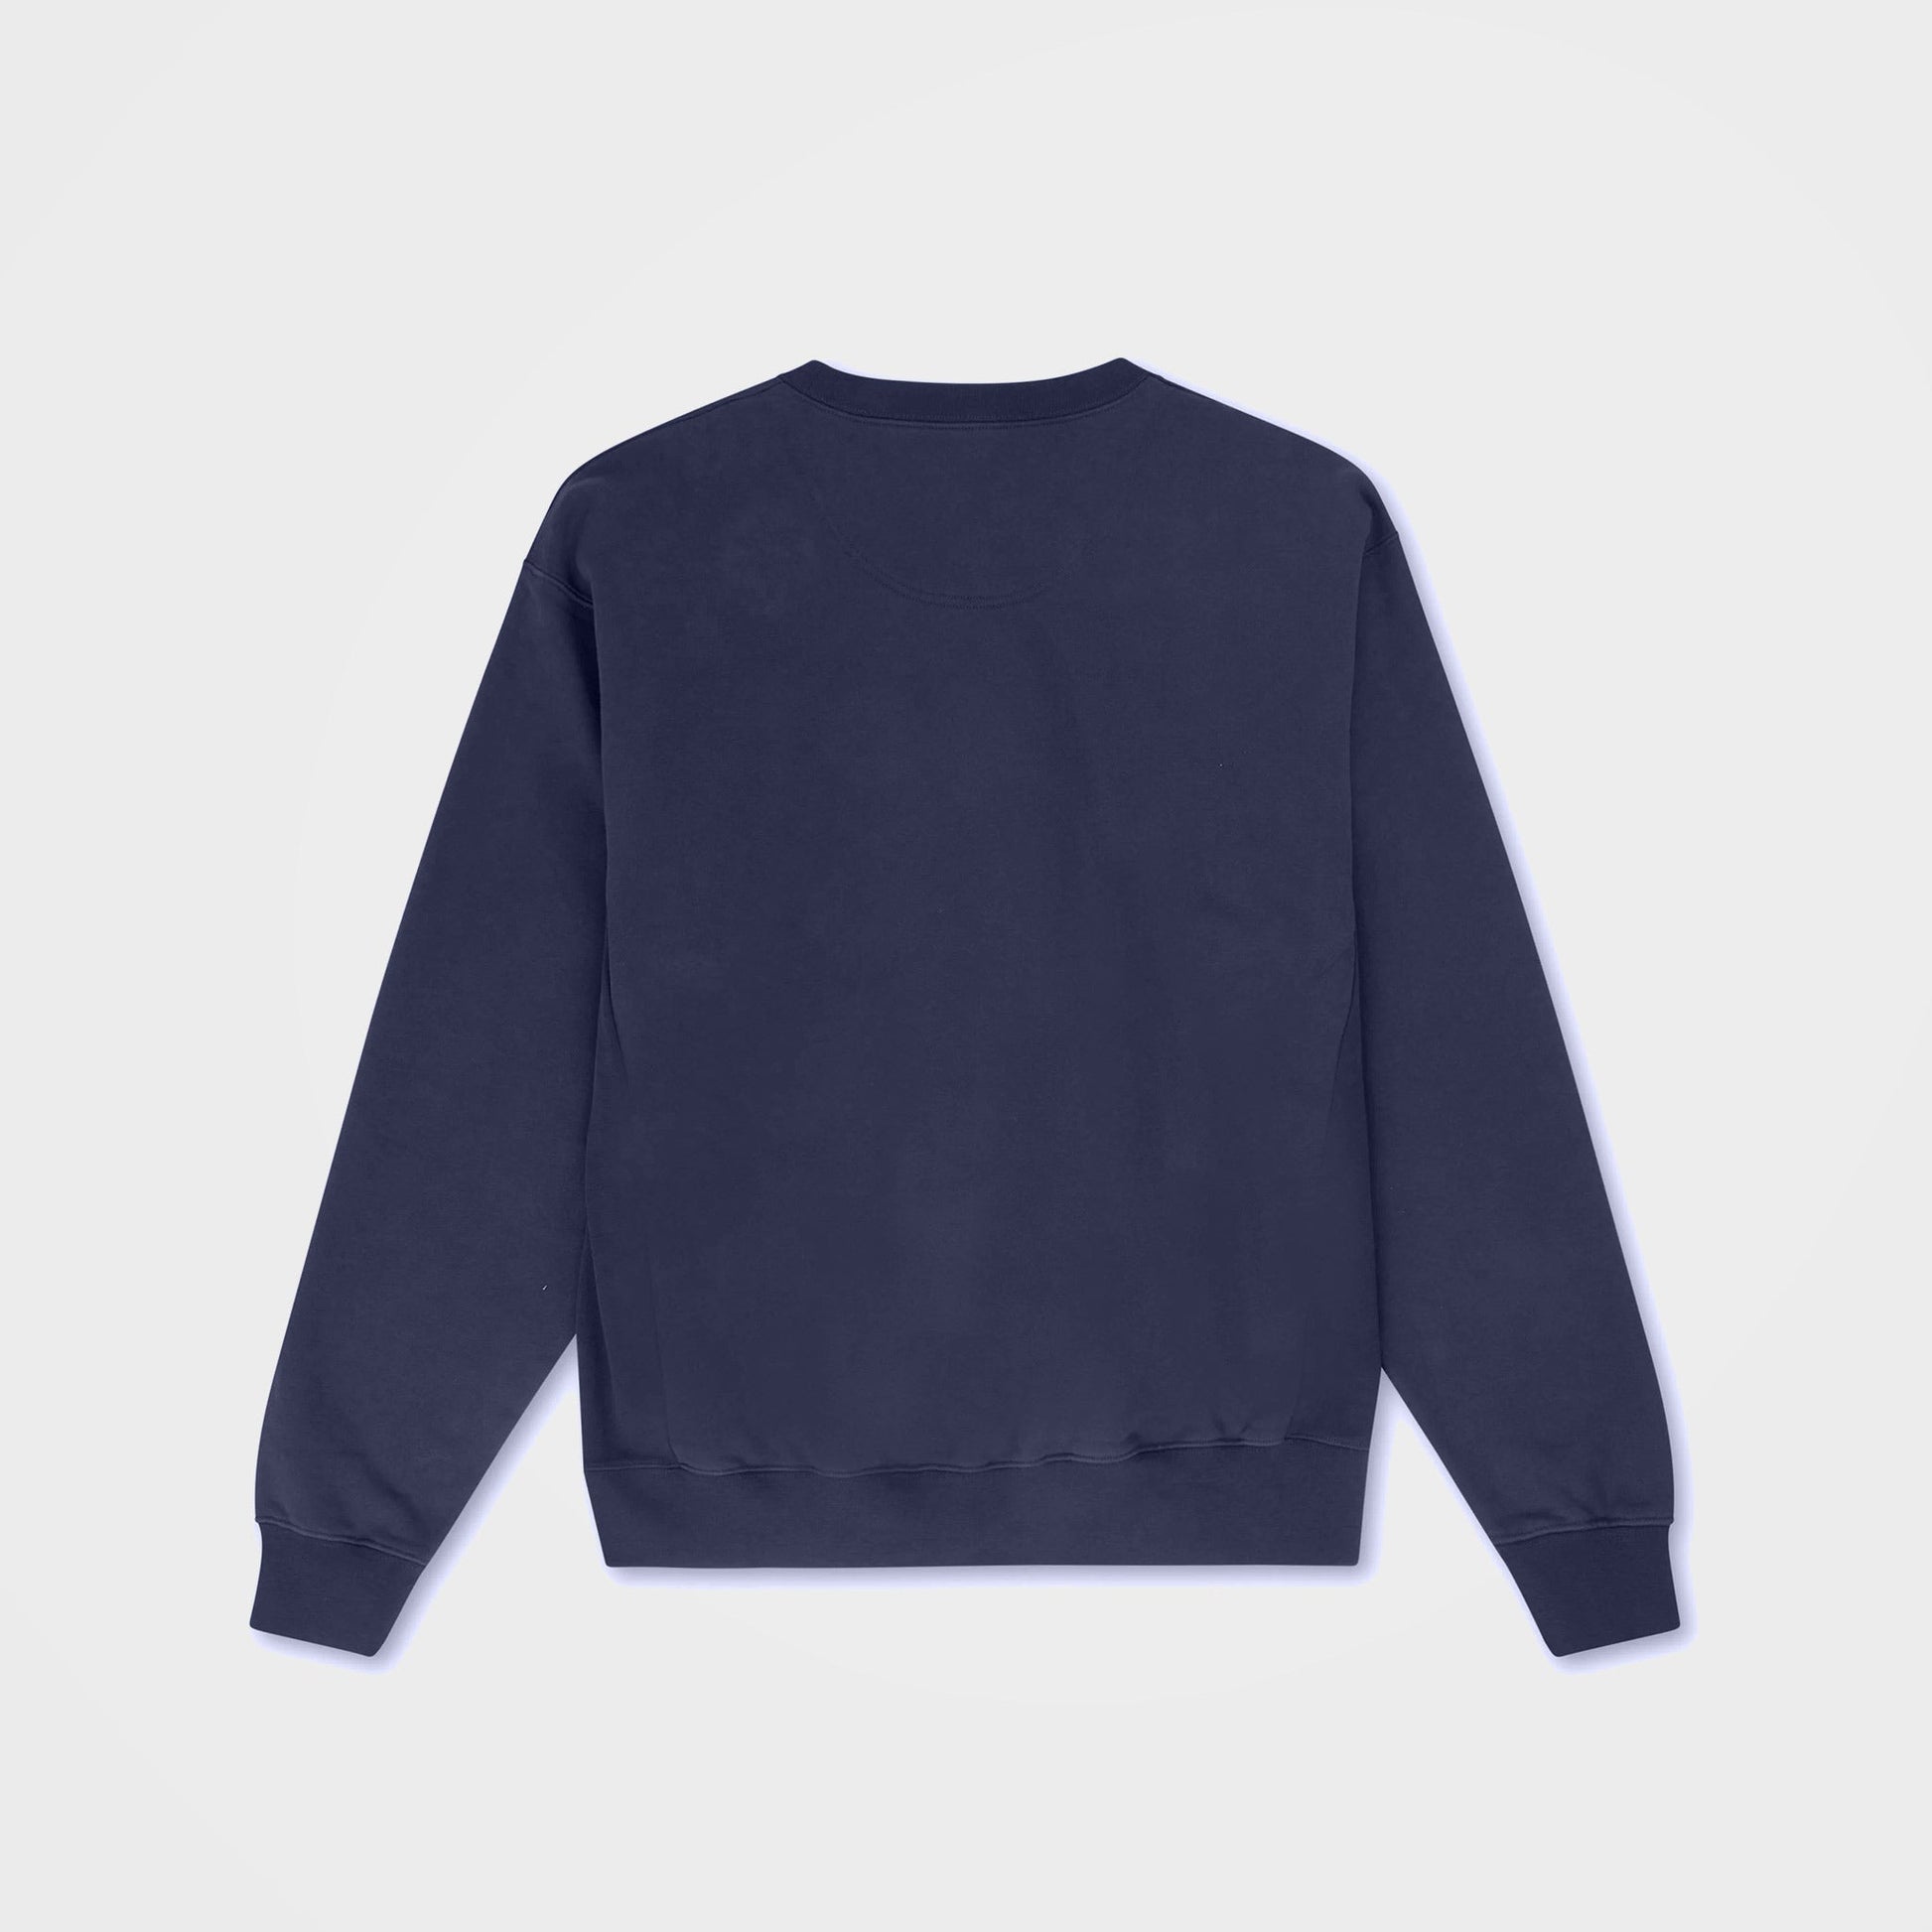 Navy Organic Cotton Sweatshirt by 7Days Acitve